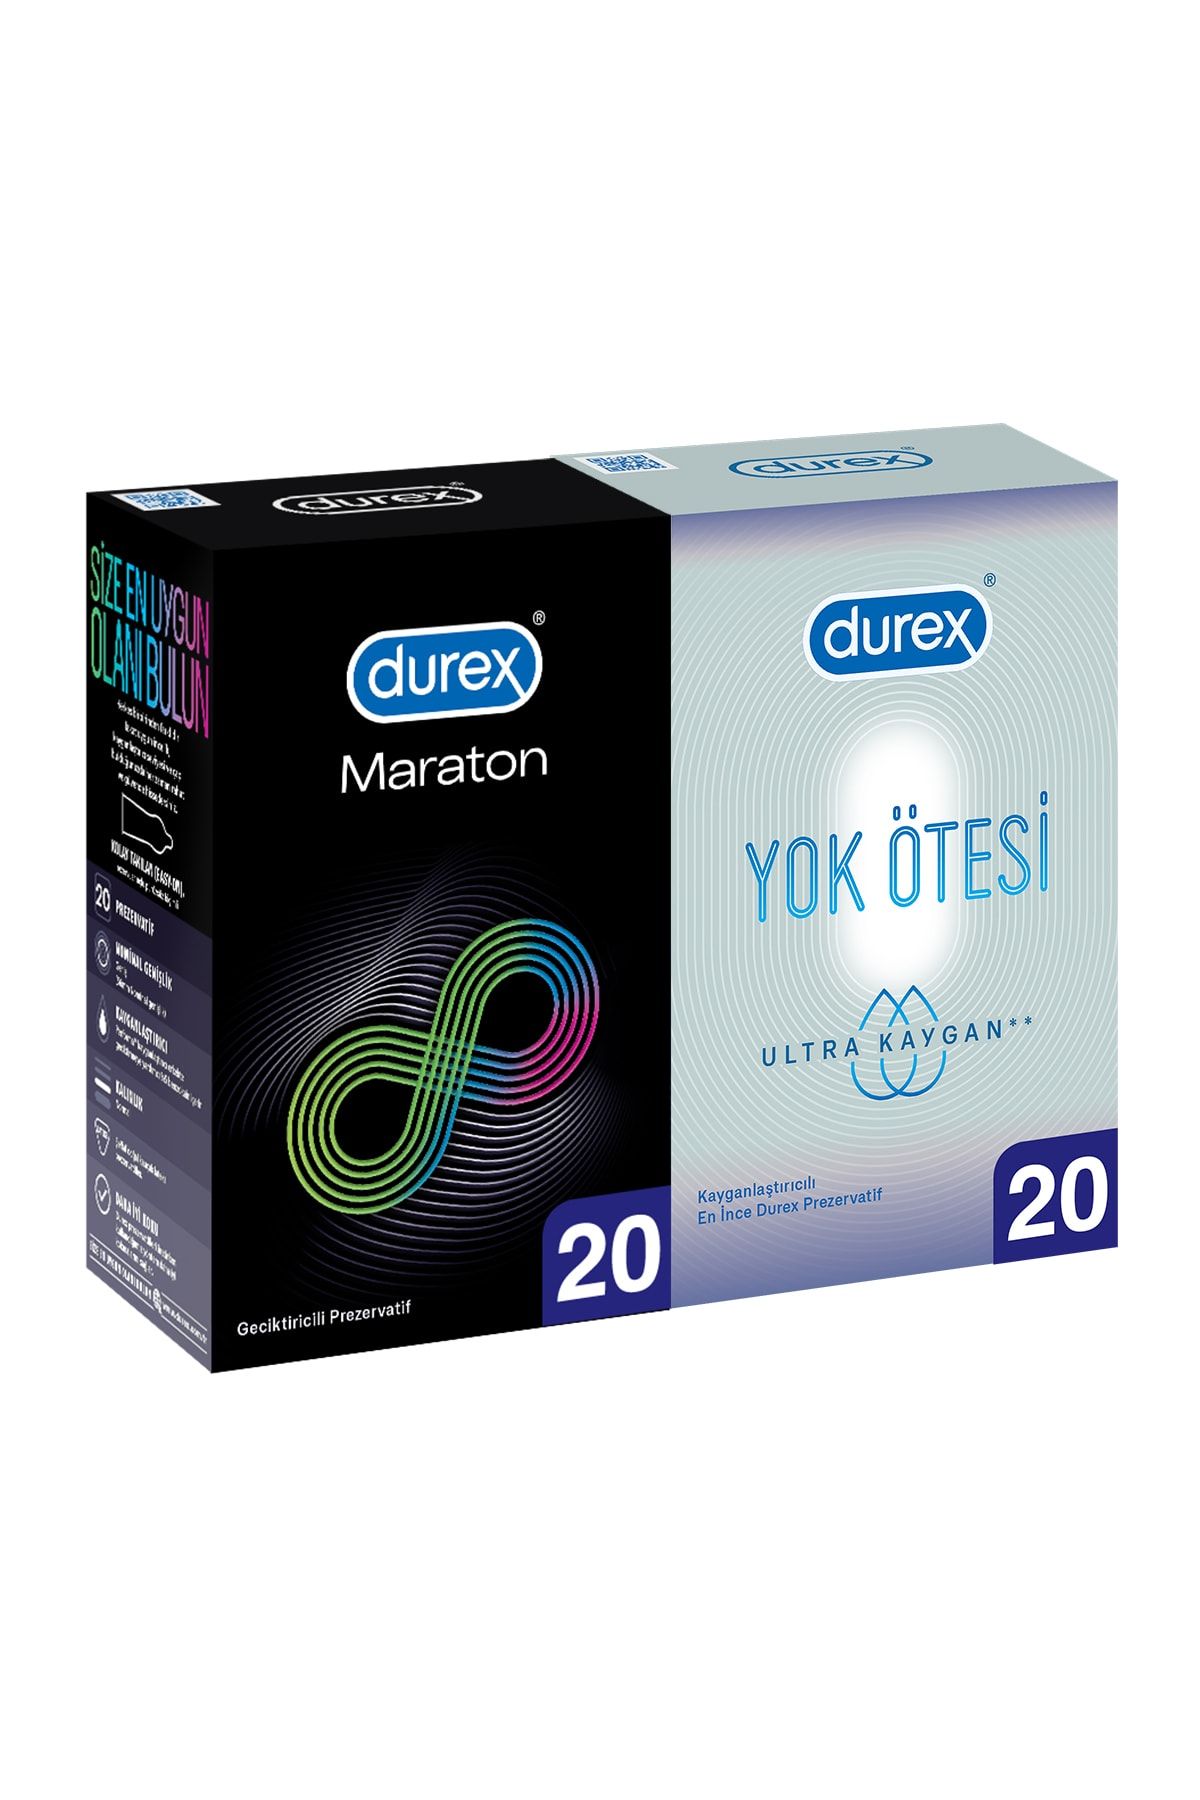 Durex Maraton Geciktiricili 20li + Yok Ötesi Ultra Kaygan 20li Prezervatif Paketi